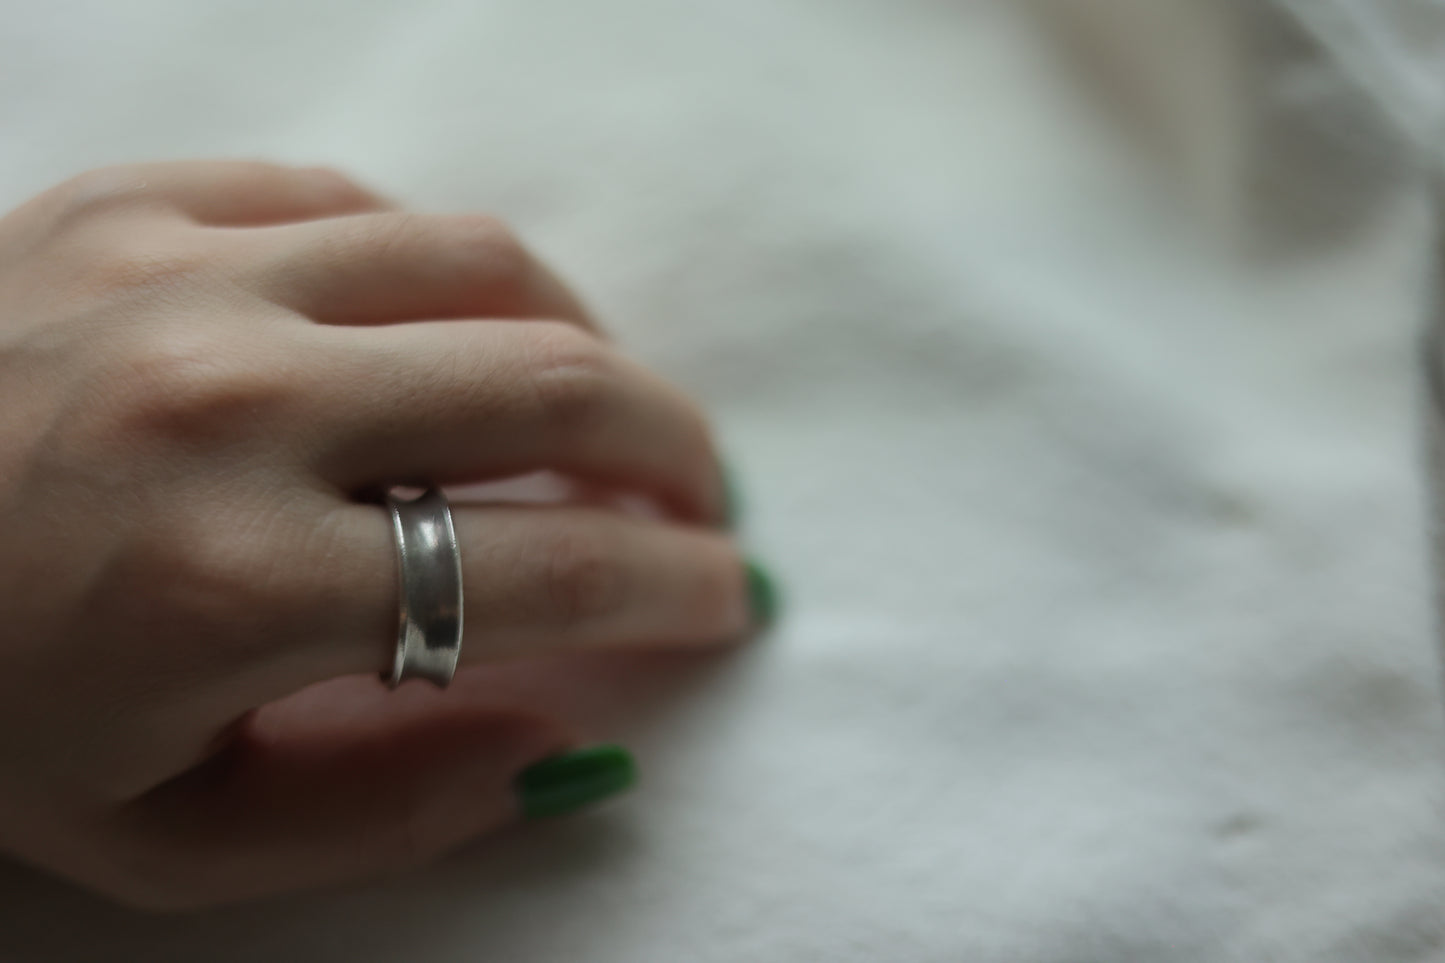 Minimalist Handmade Silver Ring